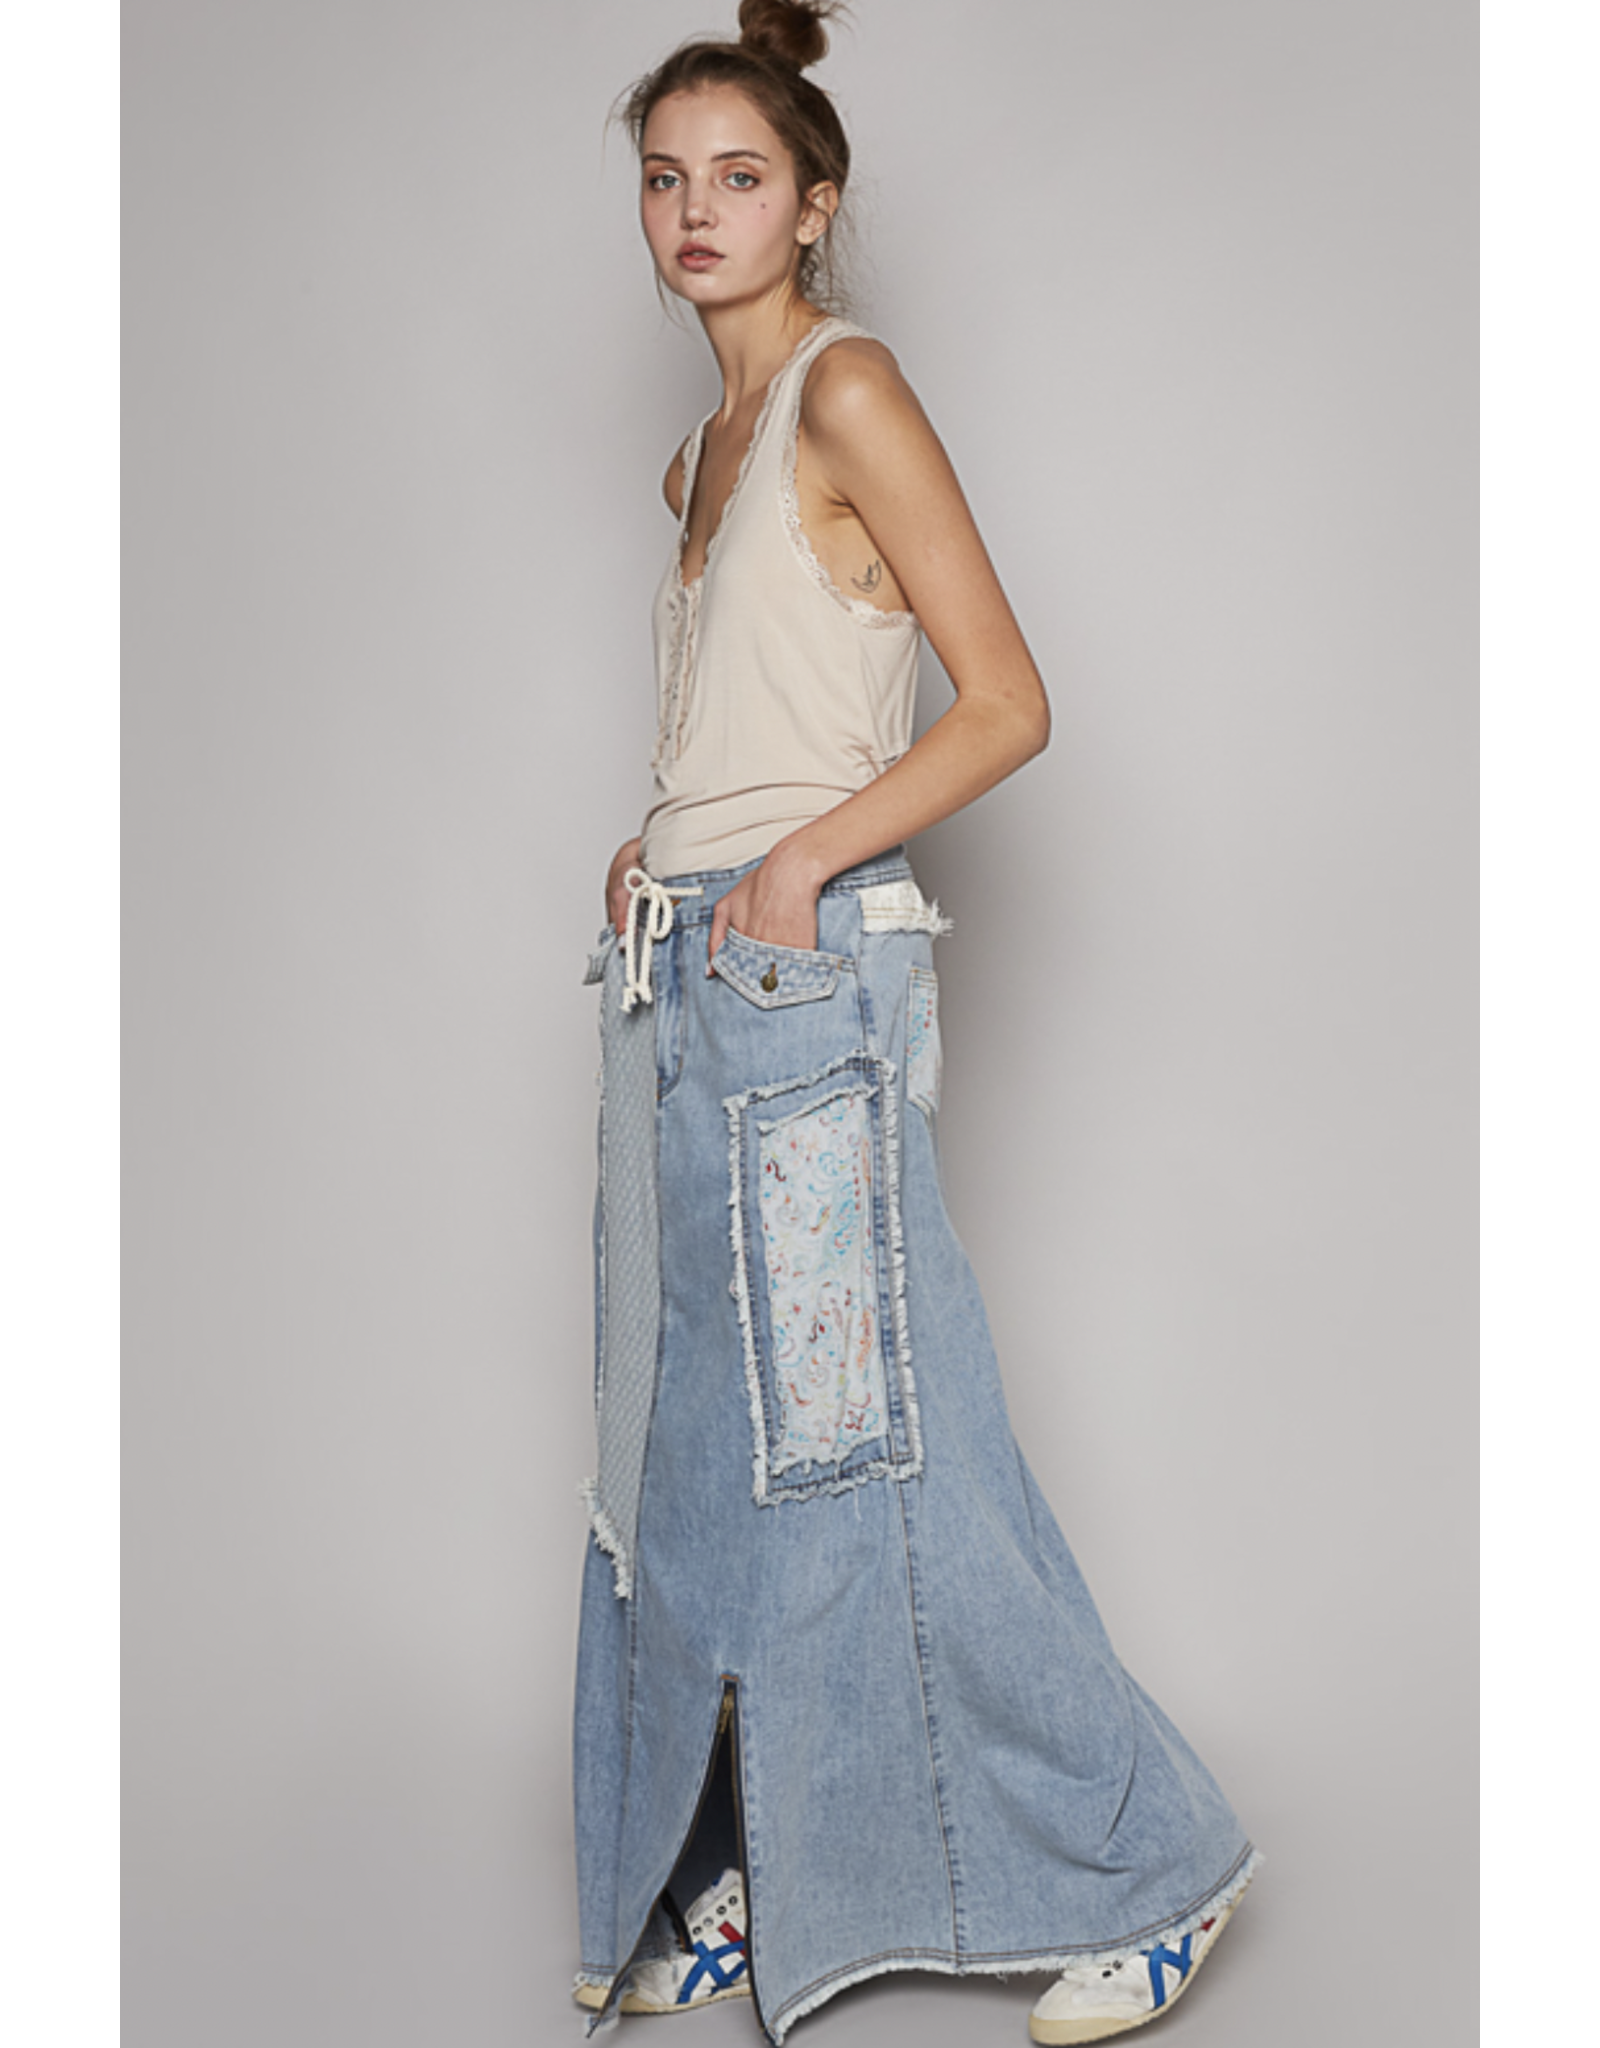 POL Scarlett - Denim skirt with drawstring waist, patches, cargo pocket